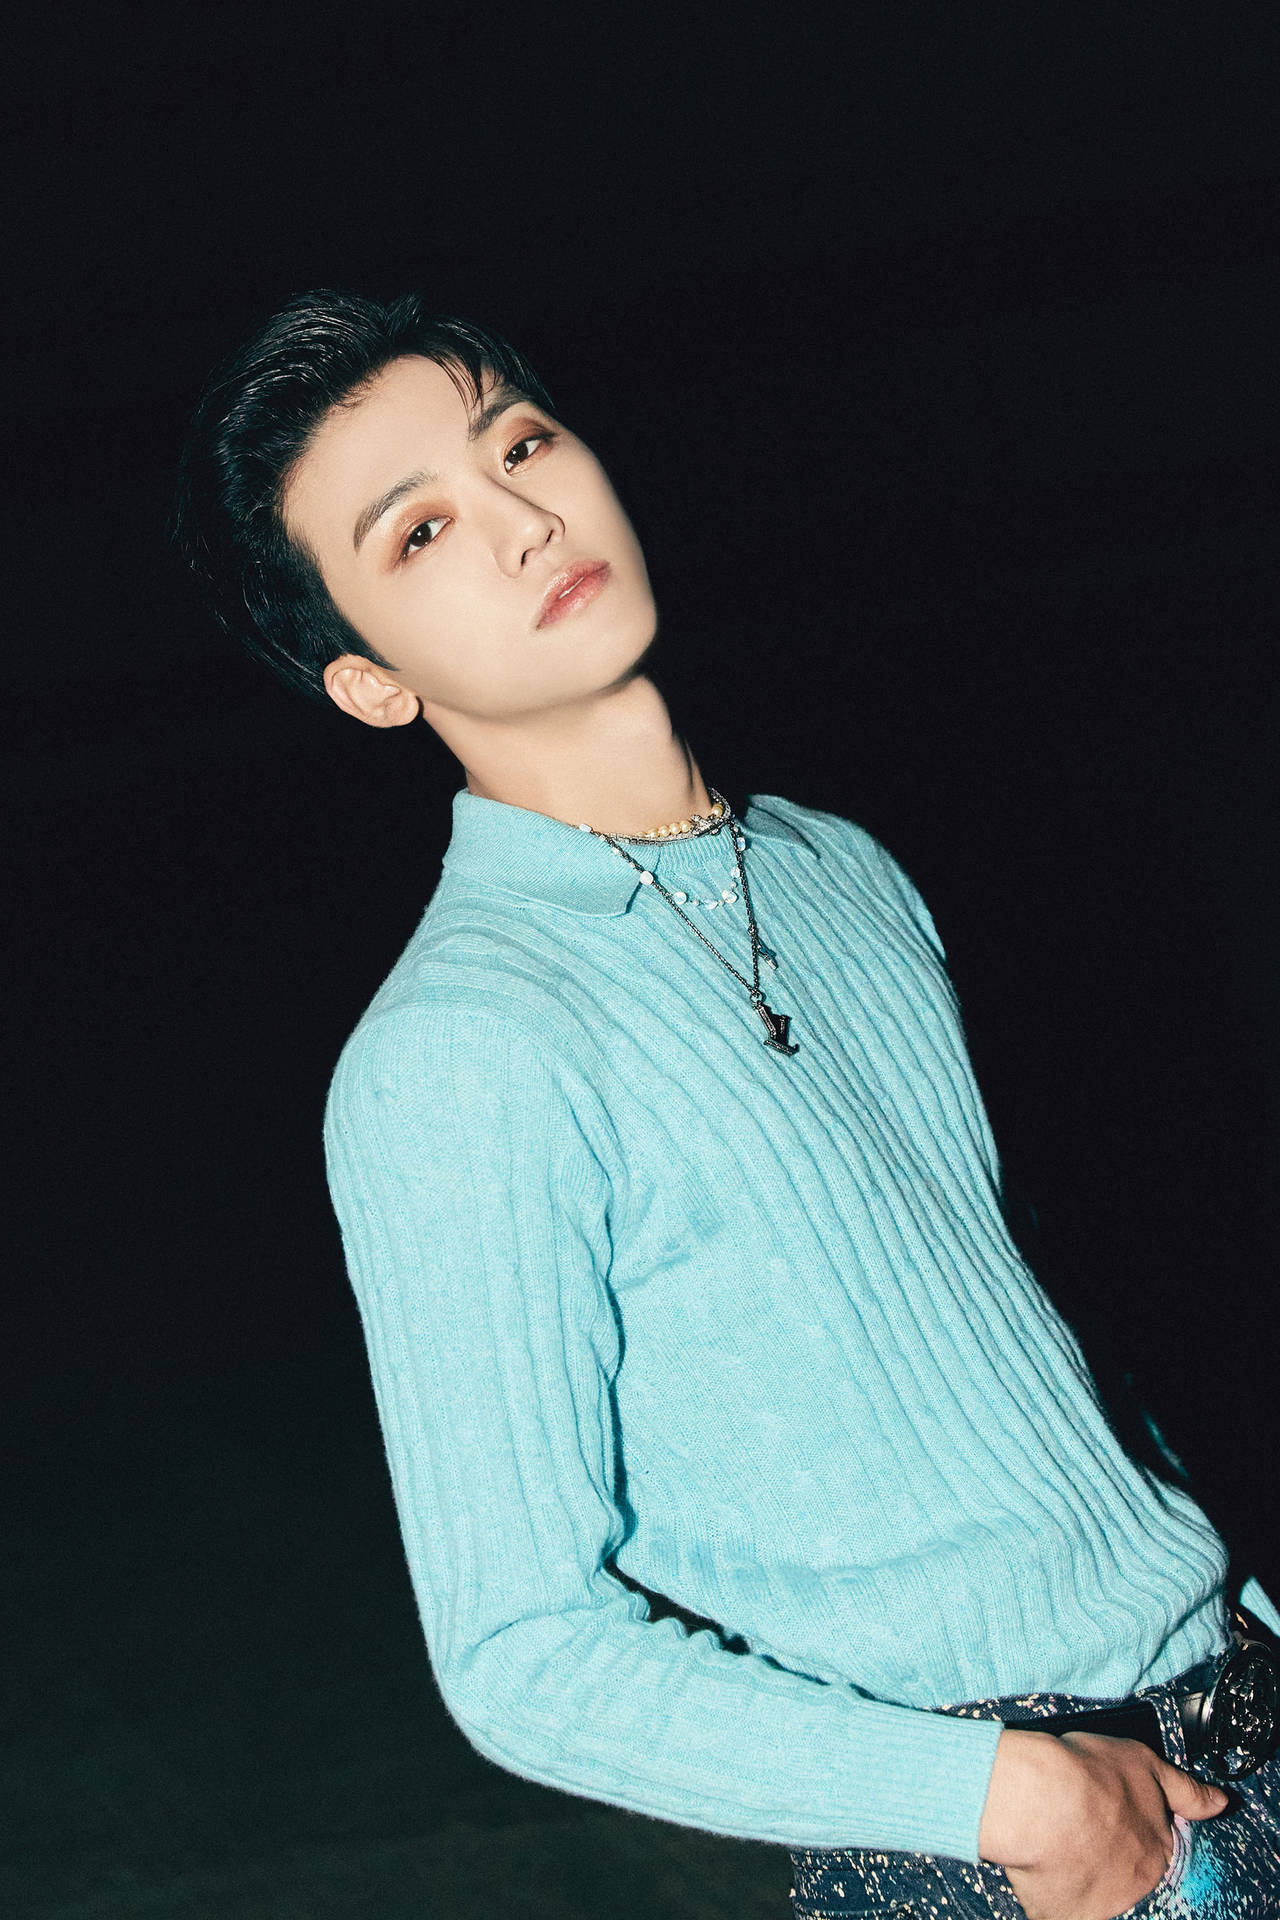 Jaemin Nct Blue Sweater Background